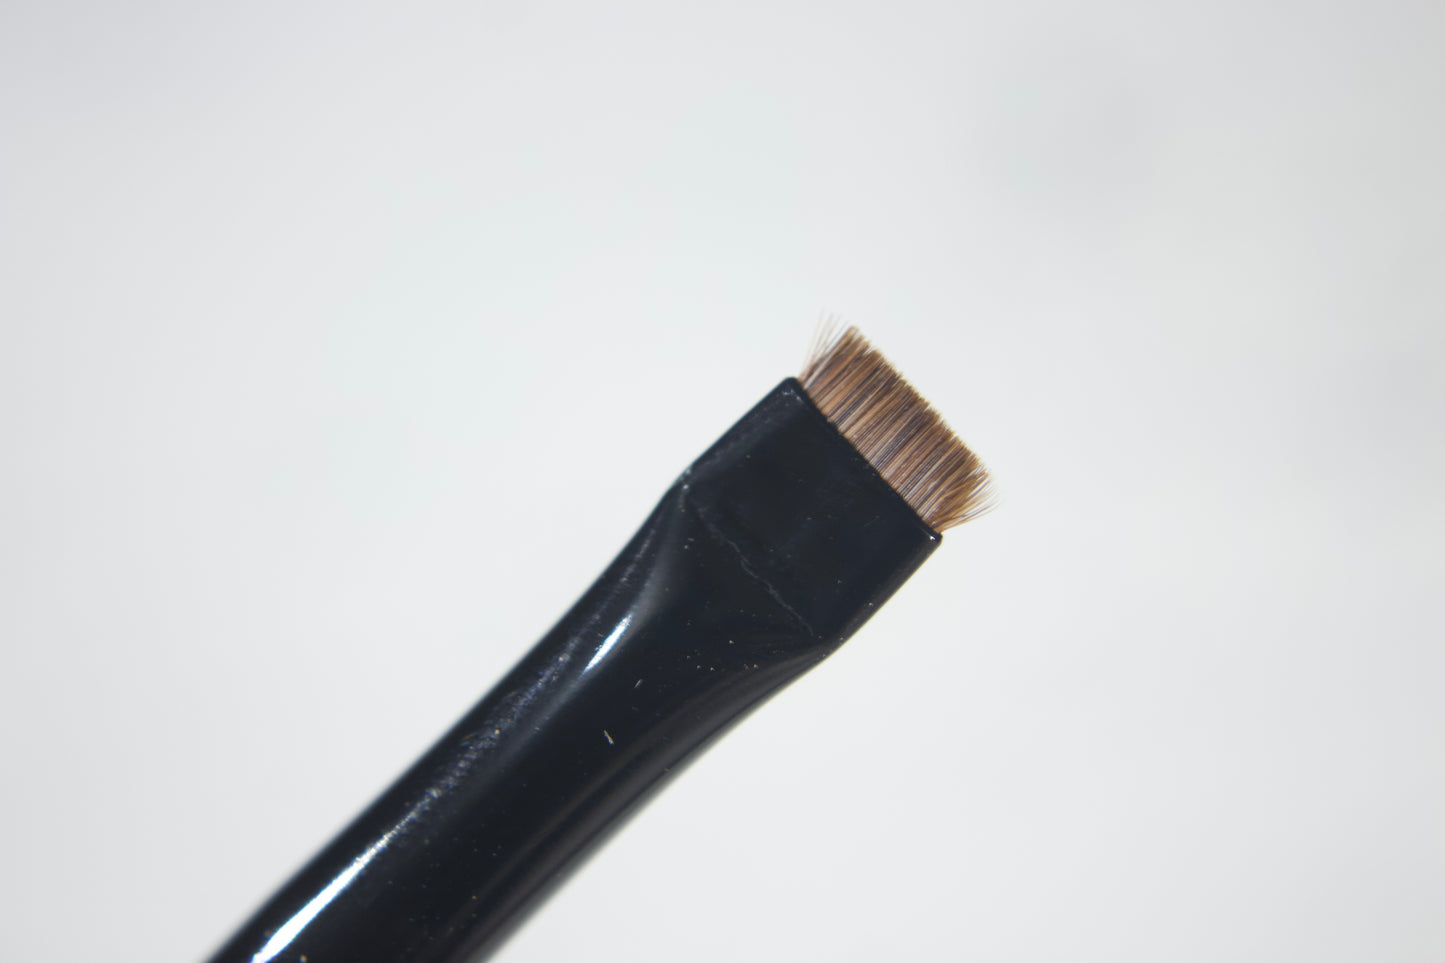 Dpakoh Percise Eyeliner Brush